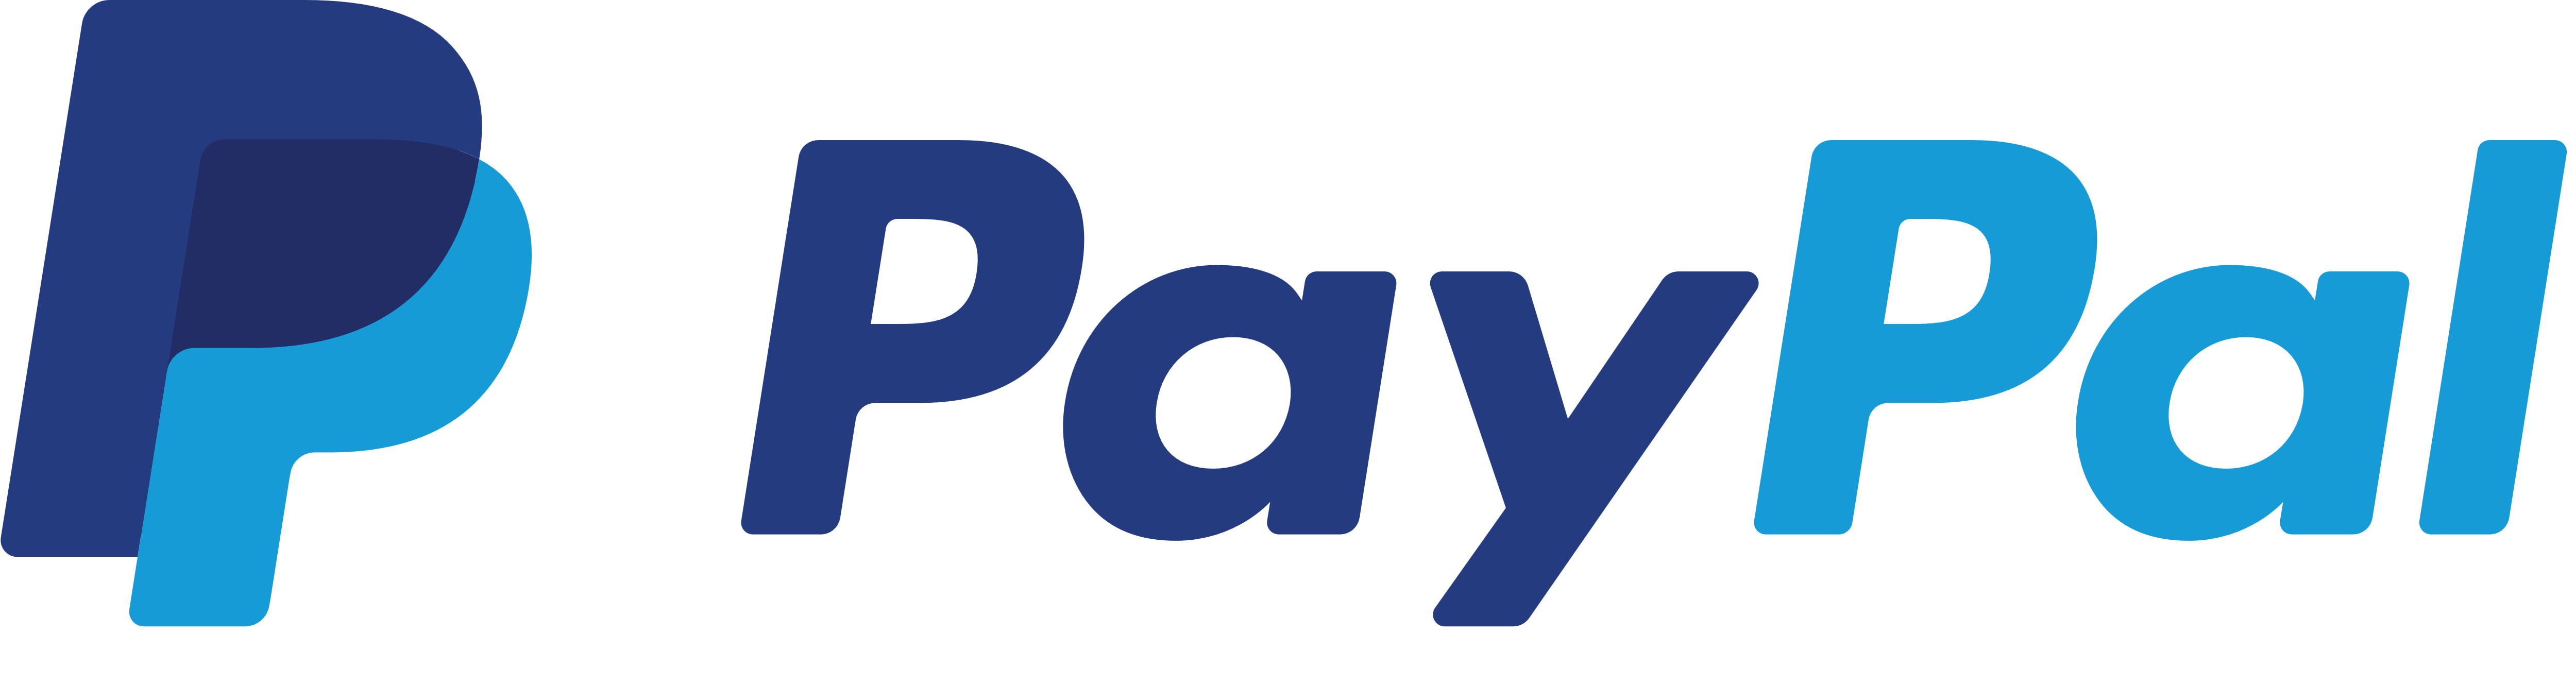 paypal, Logo, social media, B